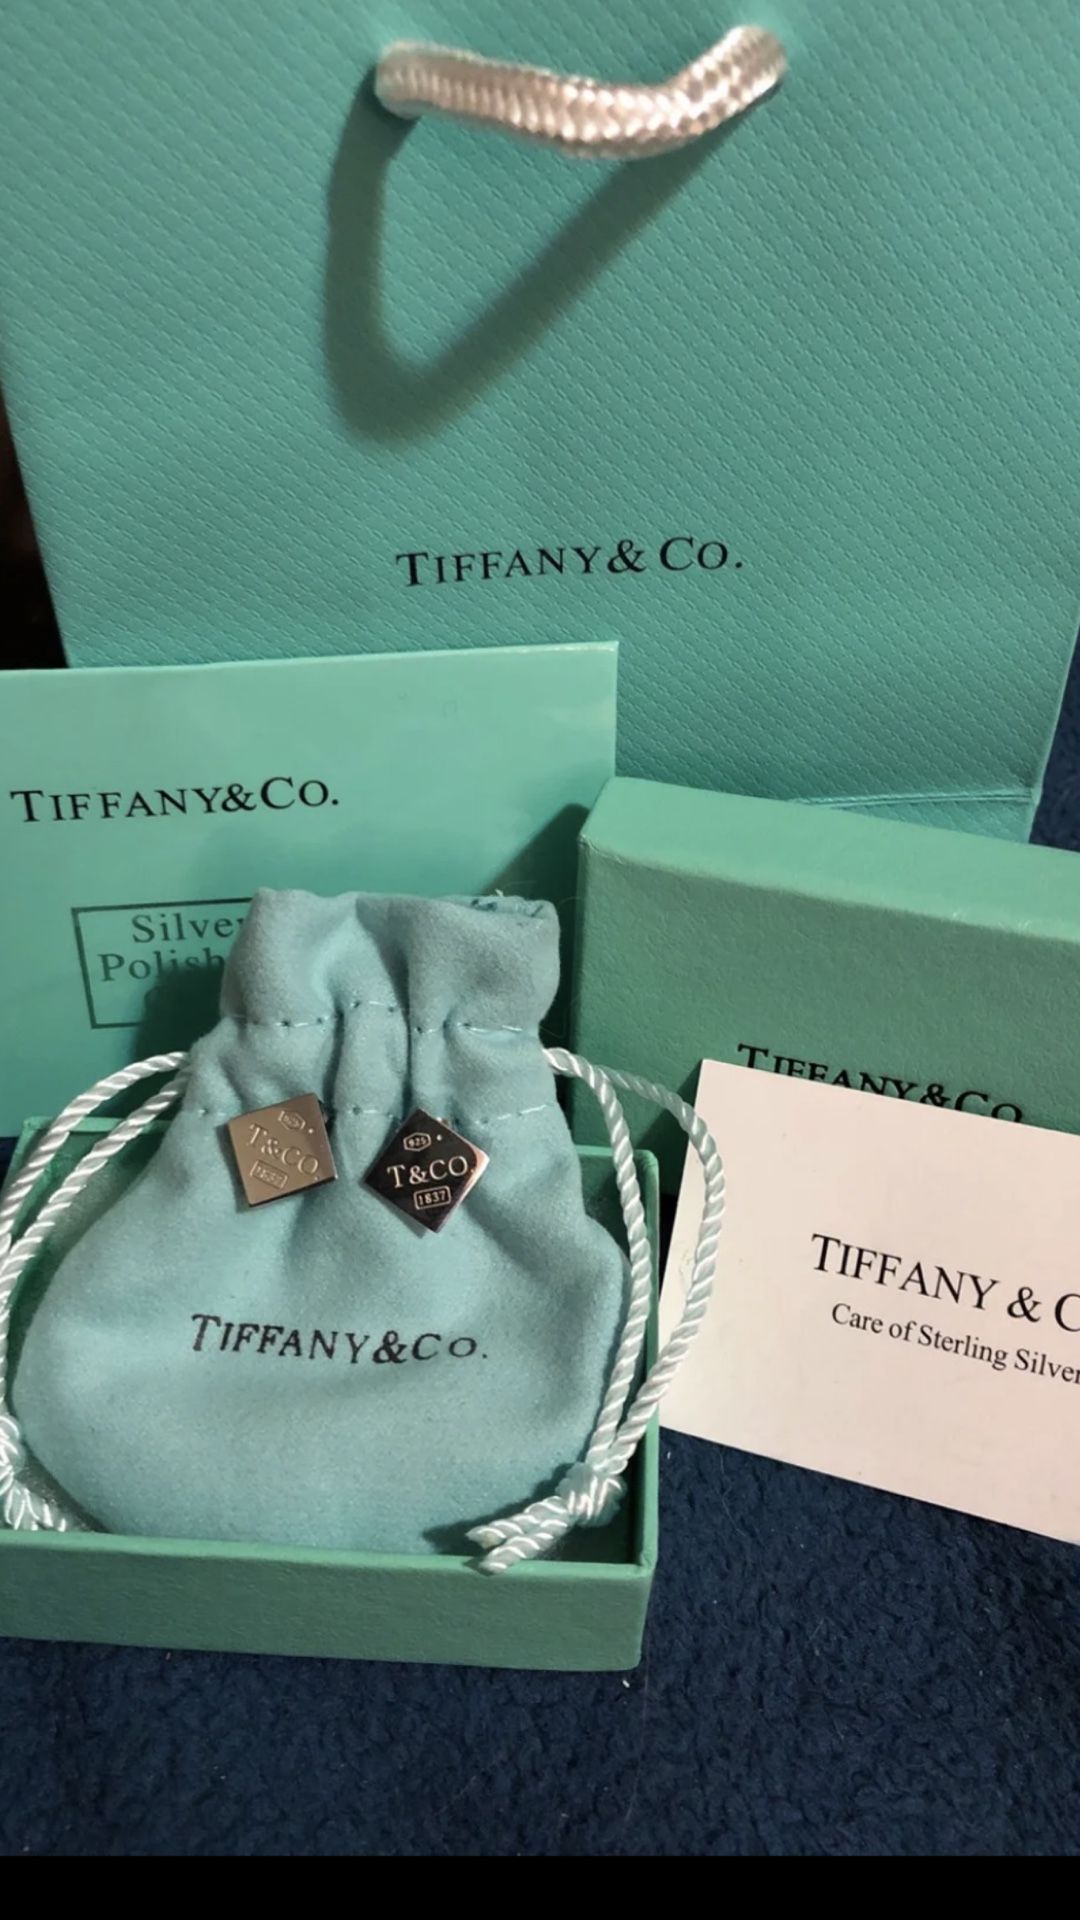 Tiffany & Co. “T & Co. Square stud earrings” Silver 925